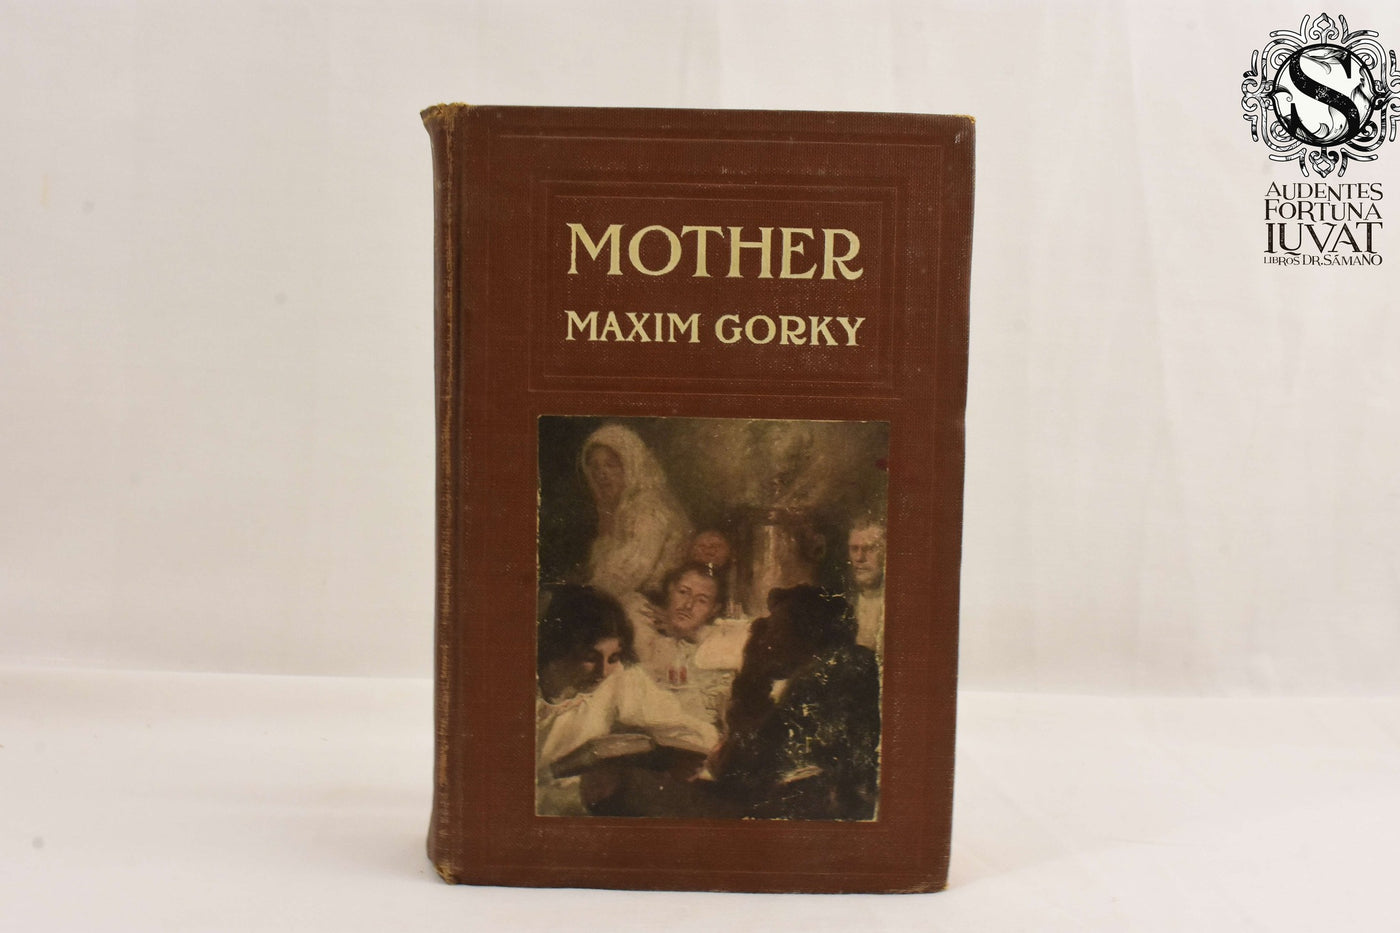 MOTHER - Maxim Gorky